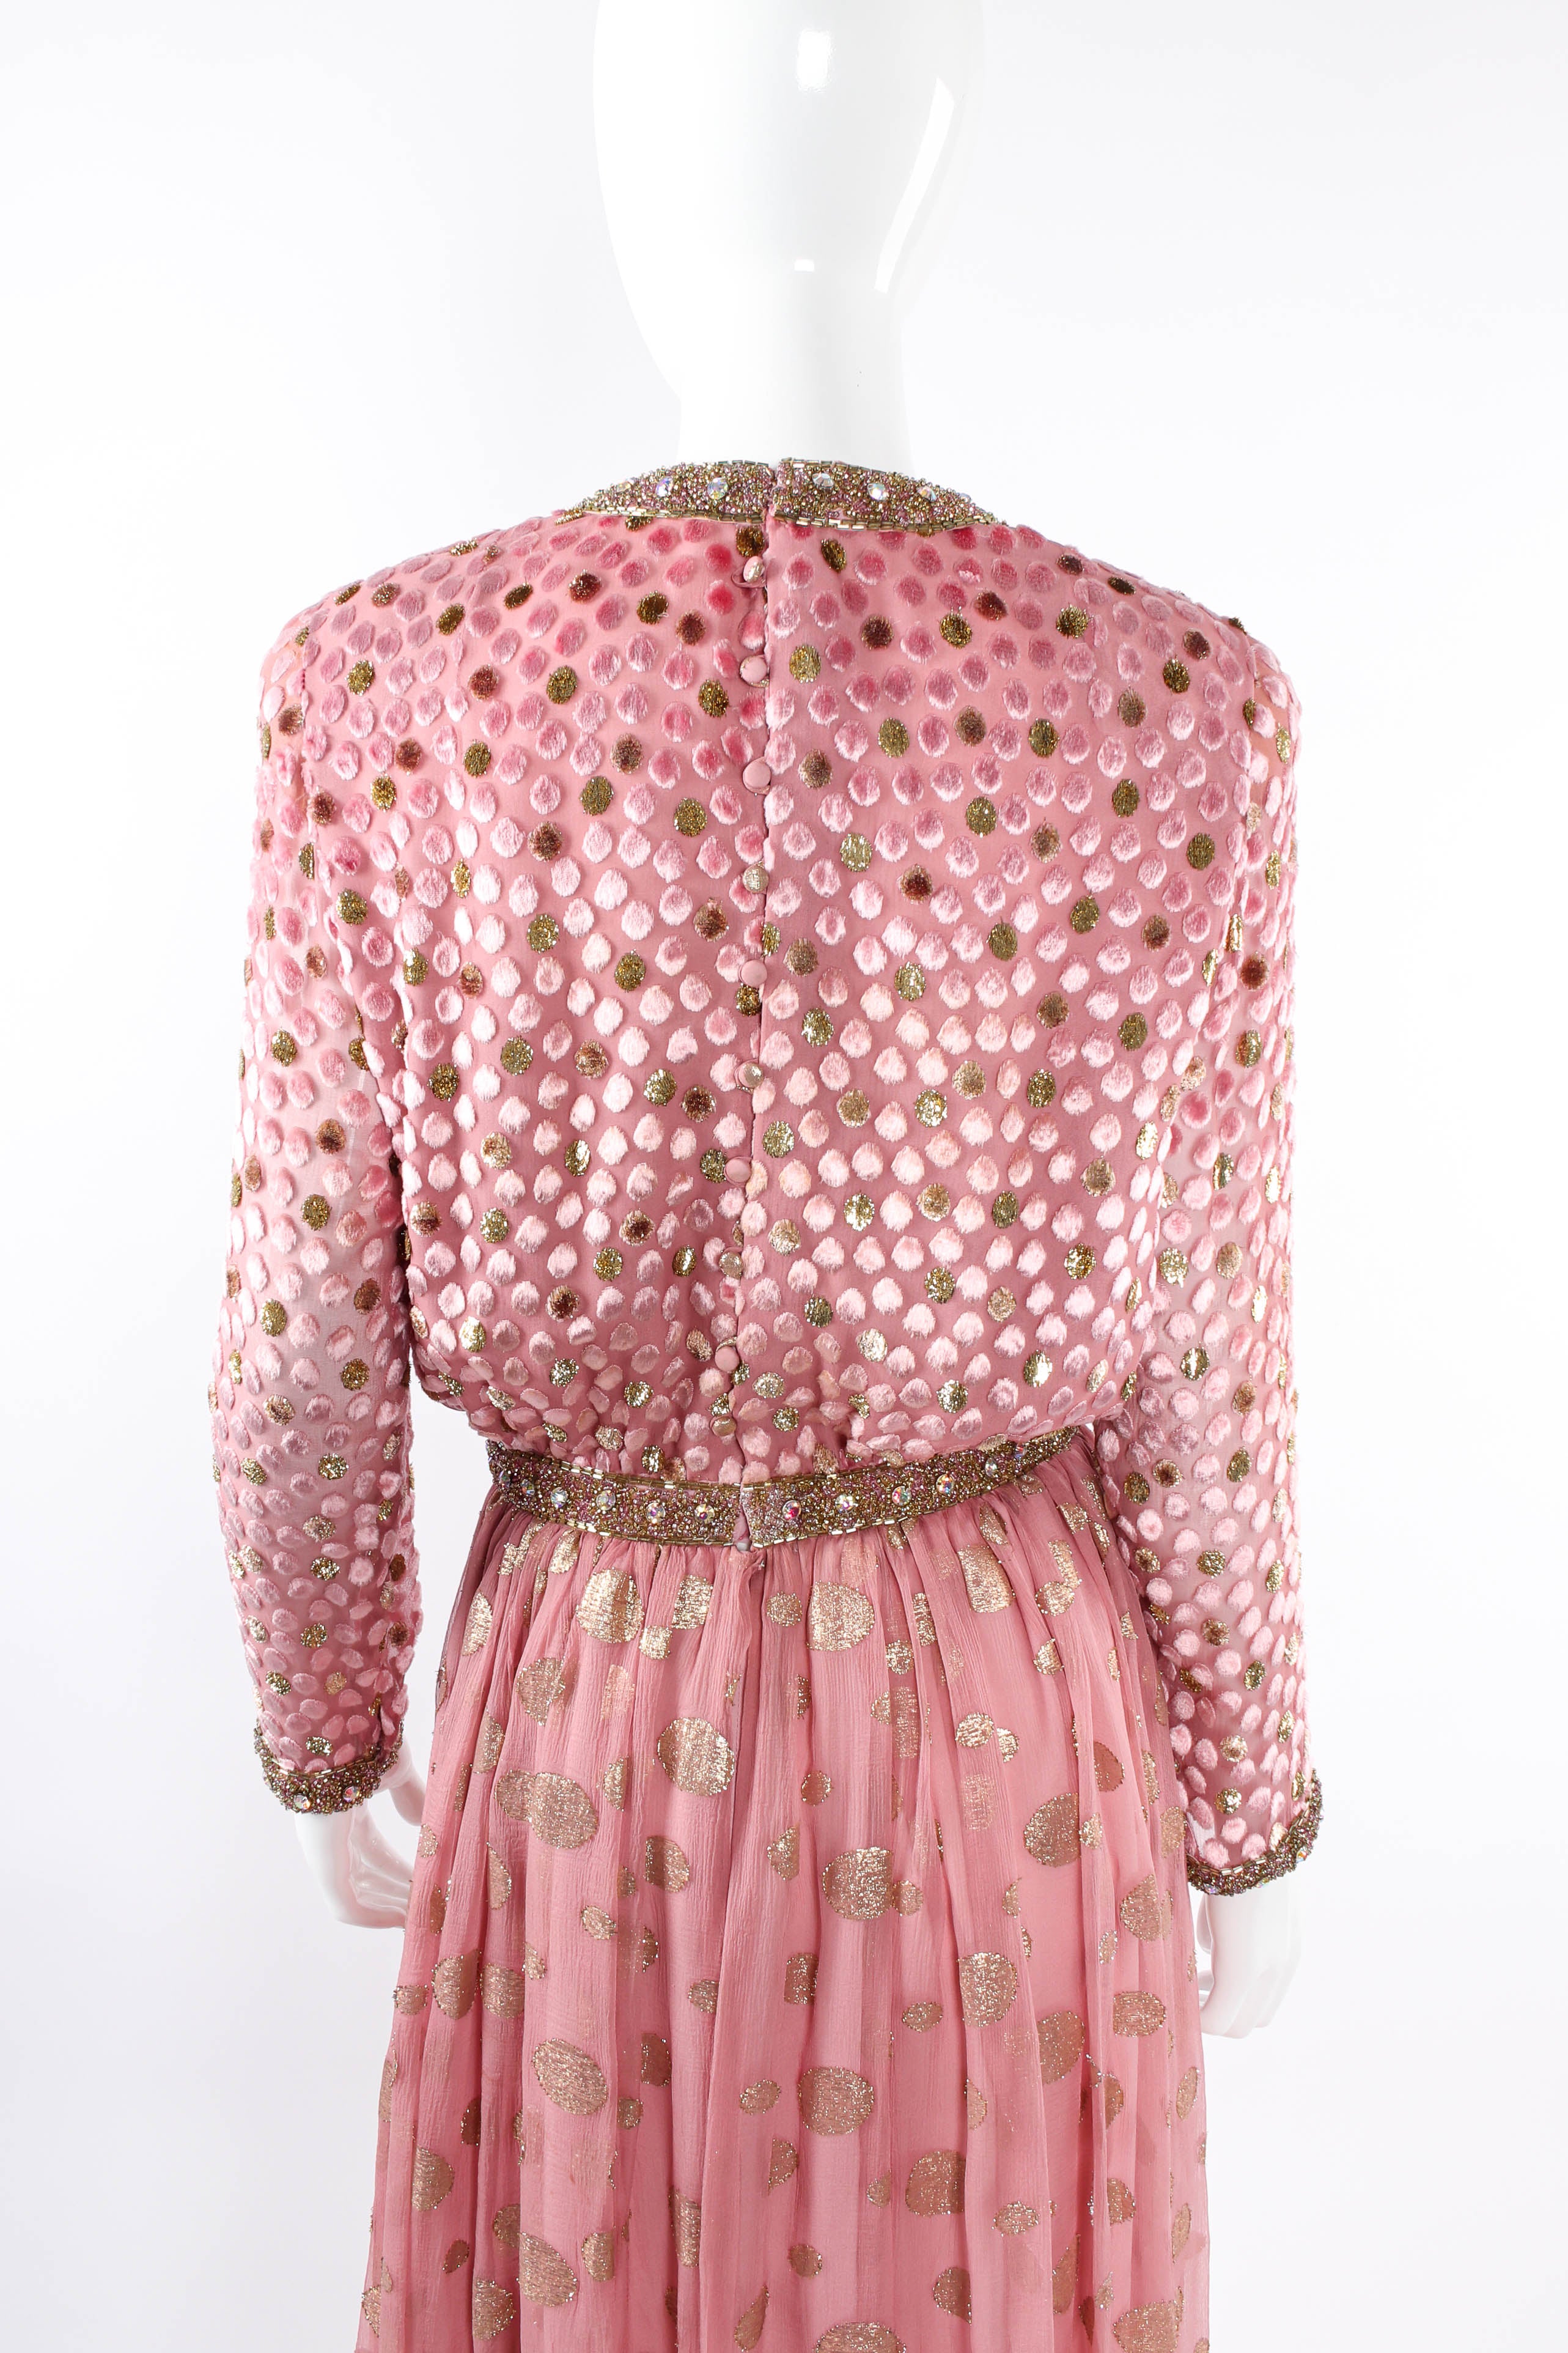 Vintage Adele Simpson Beaded Textured Dot Dress back details @ Recess LA